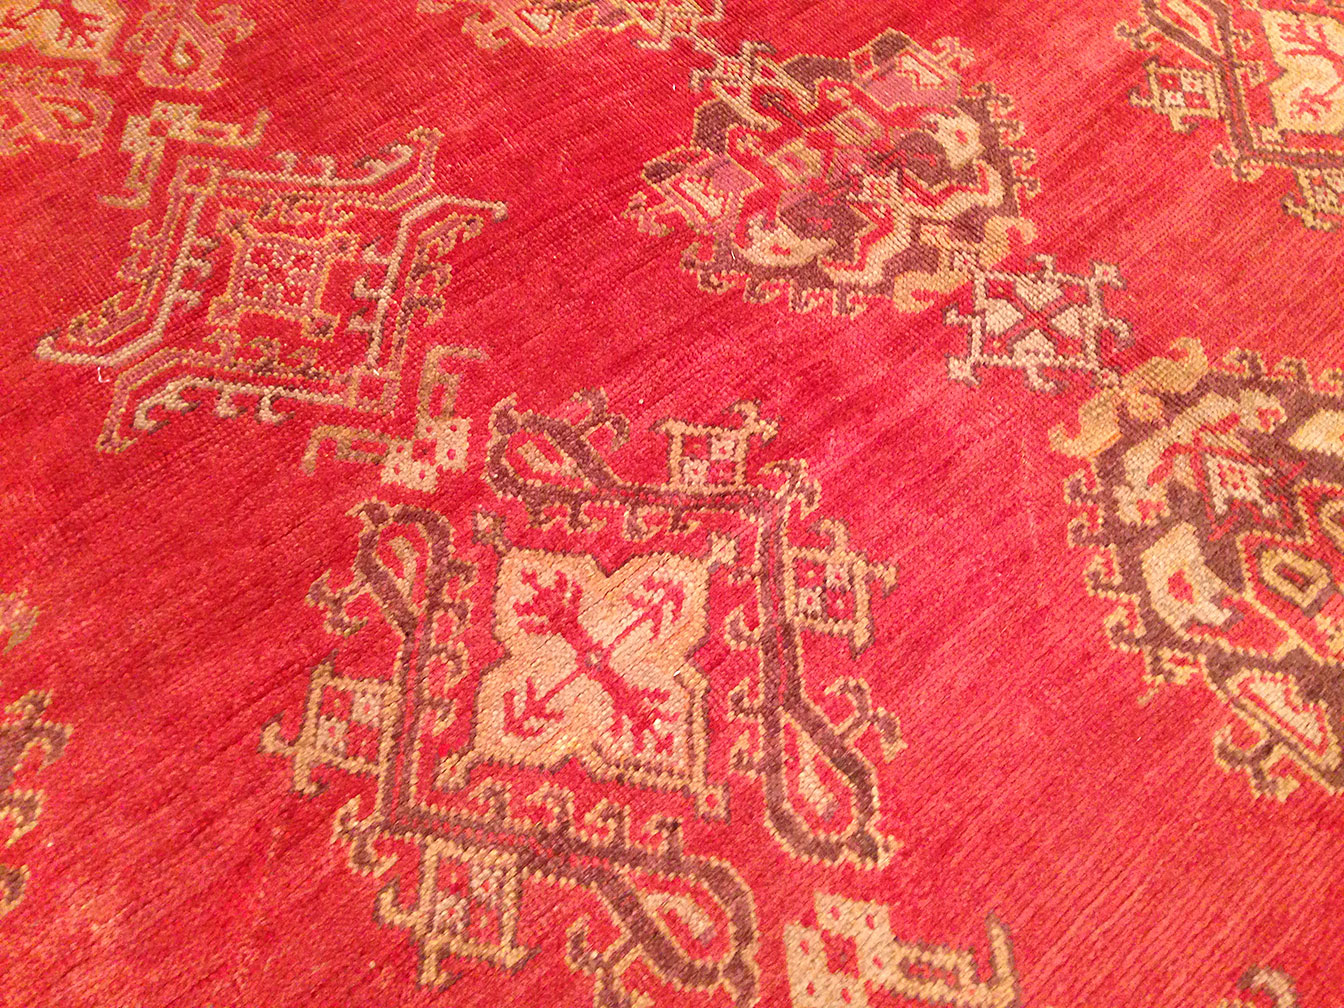 Vintage oushak Carpet - # 50369